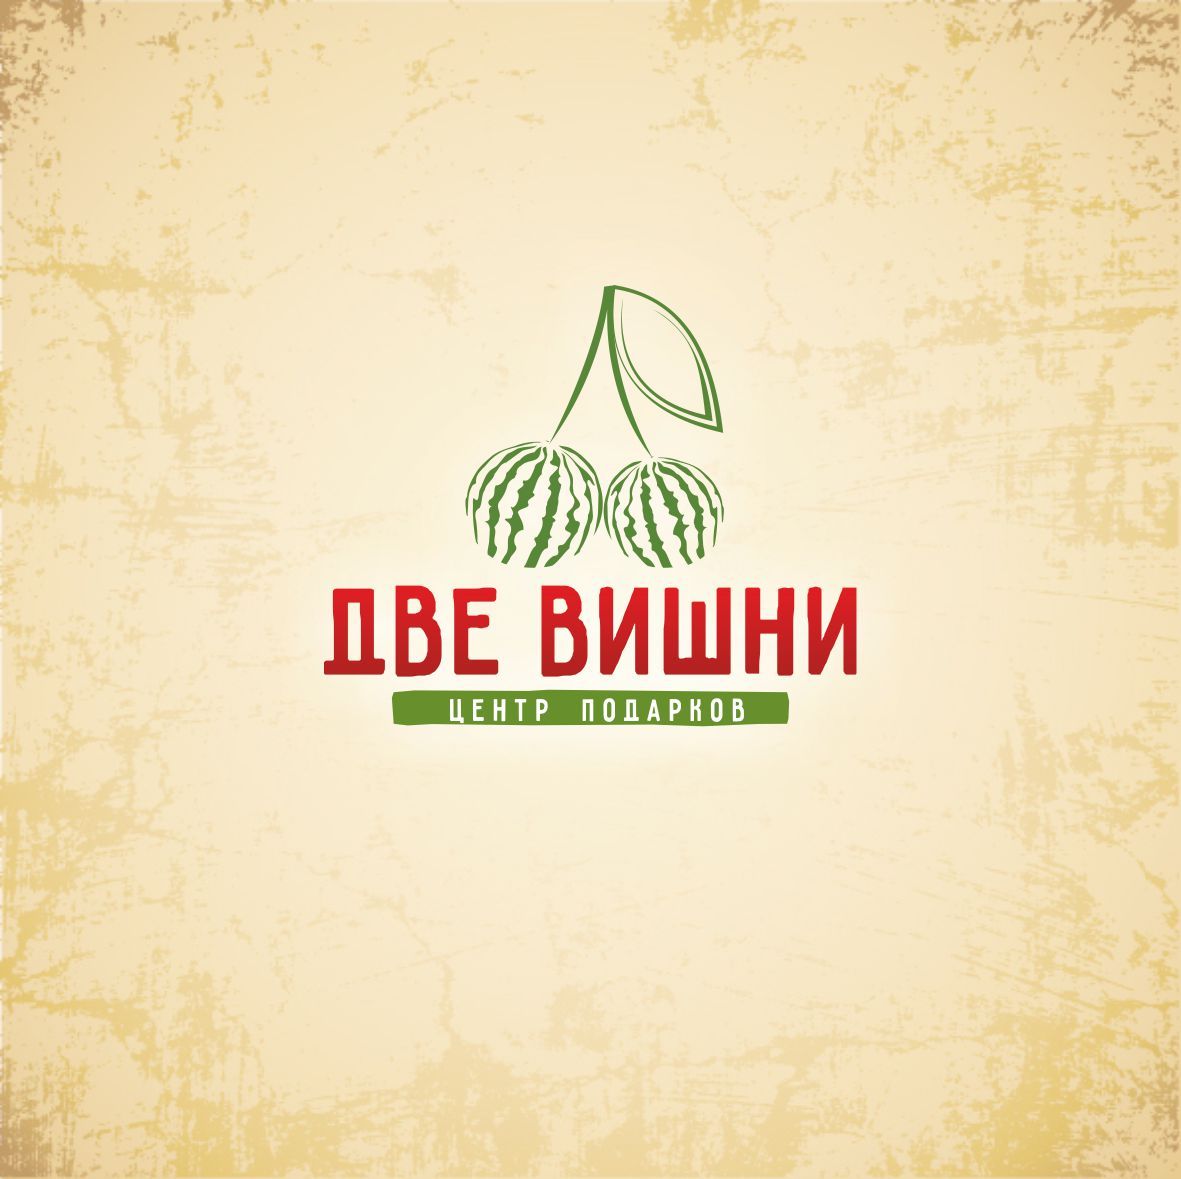 Логотип для магазина креативных подарков - дизайнер Kseniya